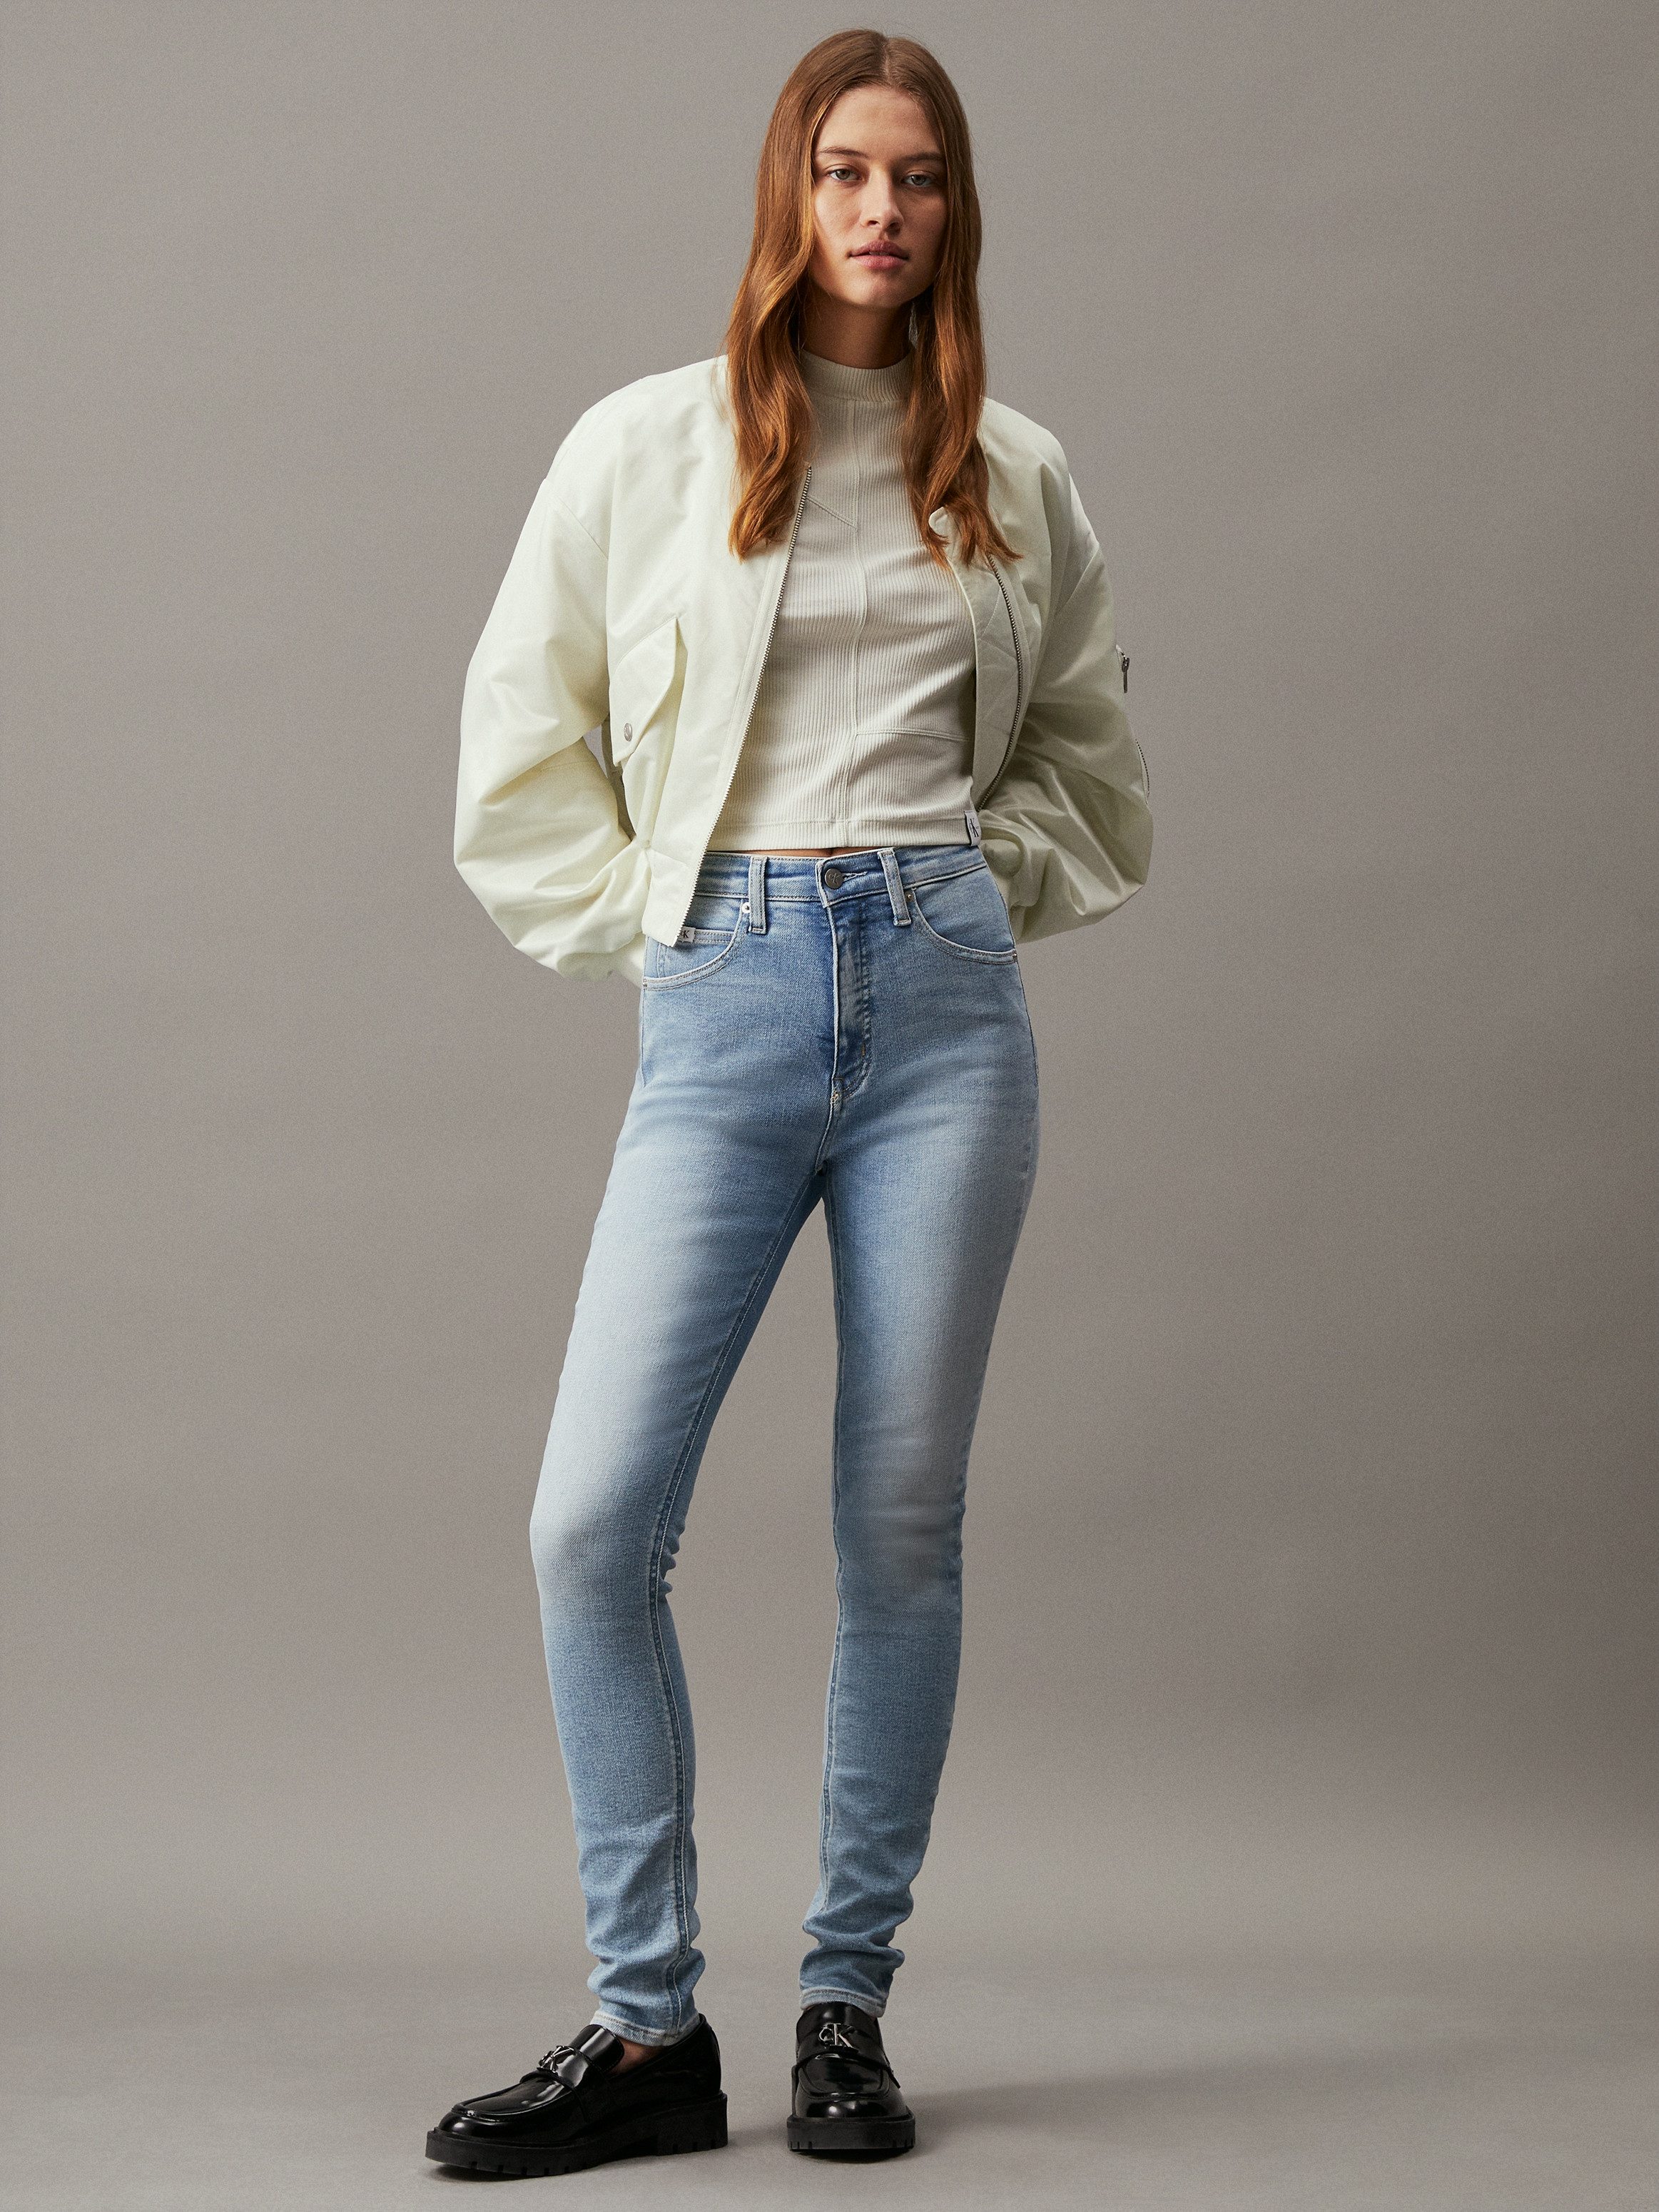 Calvin Klein Skinny fit jeans High rise skinny